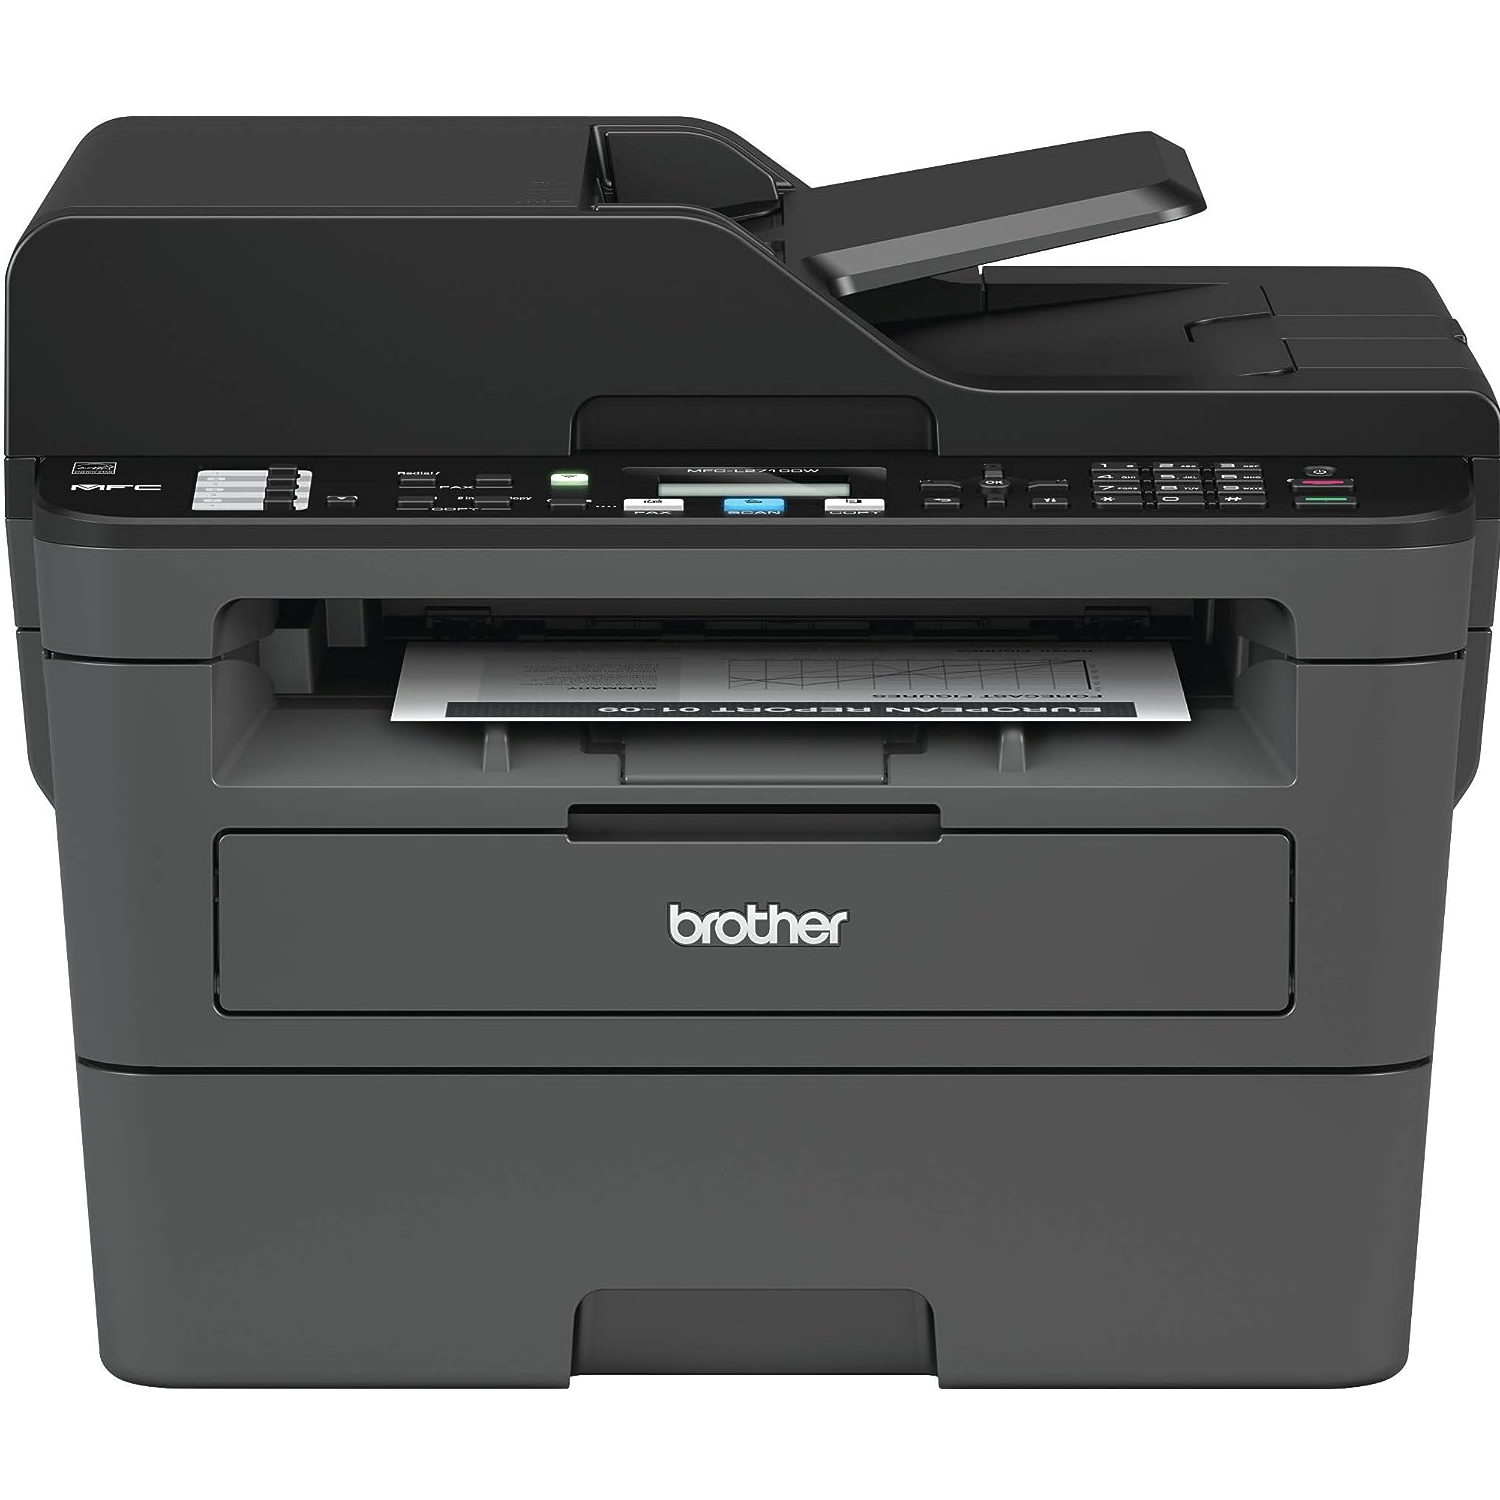 Brother multifunction printer